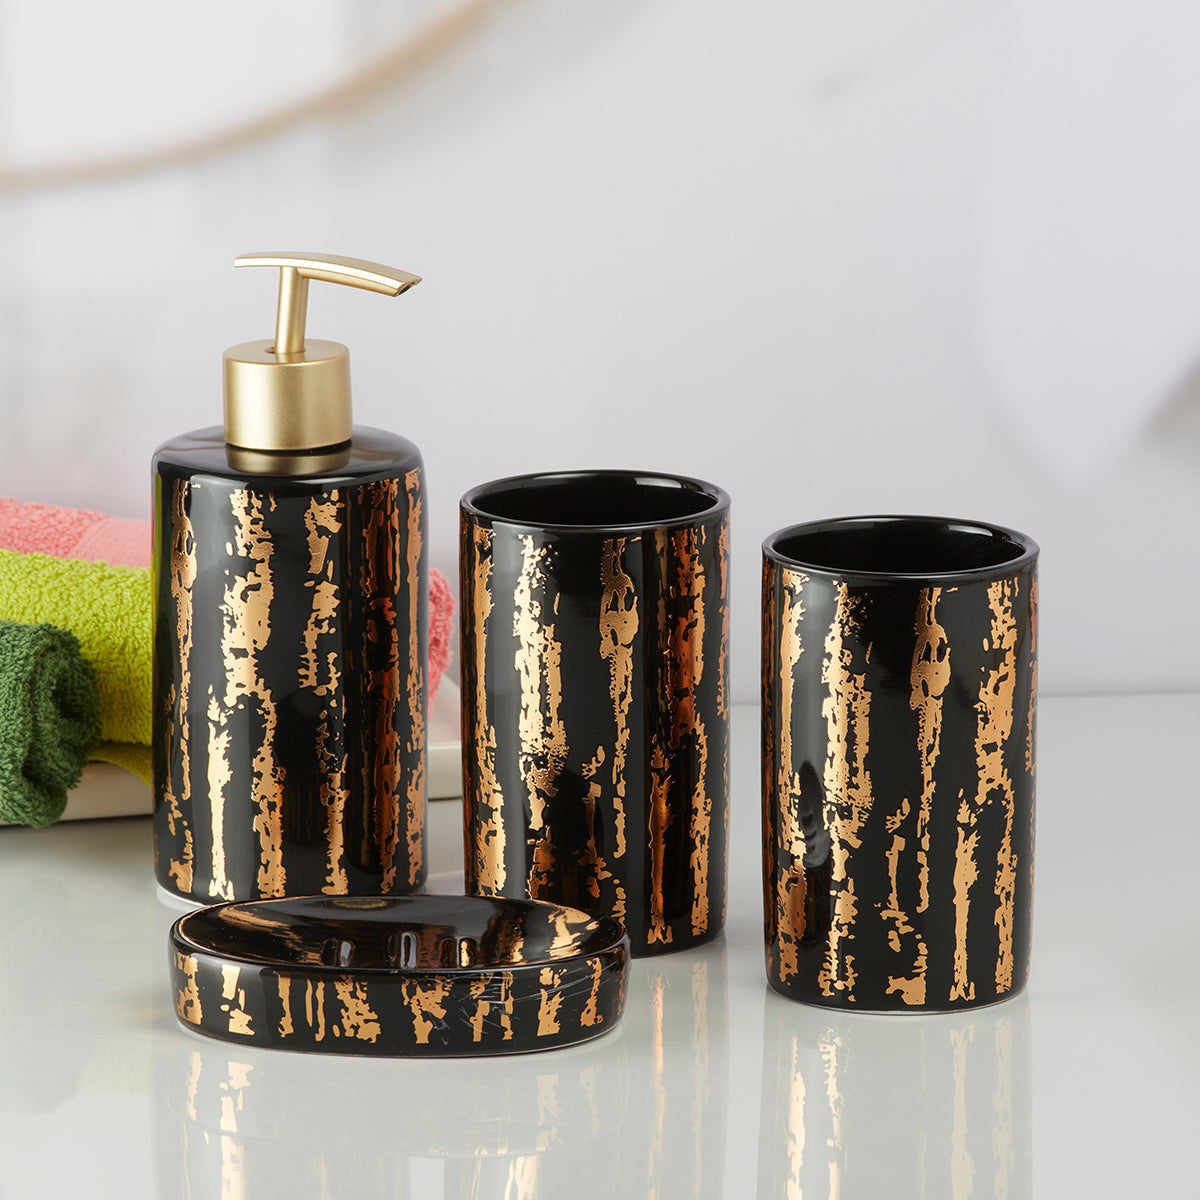 Ceramic Bathroom Accessories Set of 4 Bath Set with Soap Dispenser (10077)